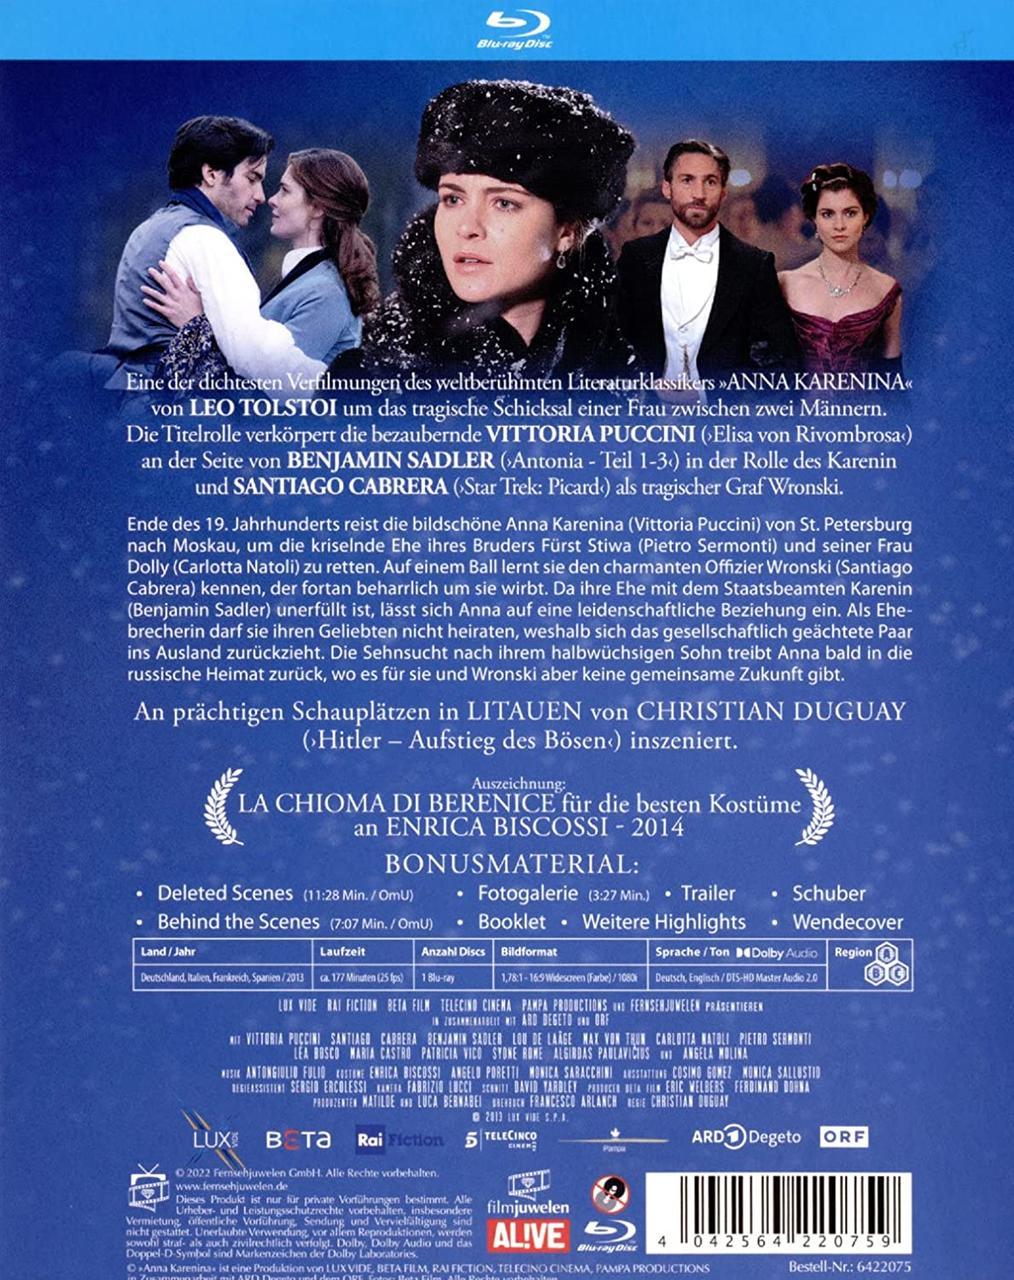 Anna Karenina Blu-ray - Miniserie komplette Die